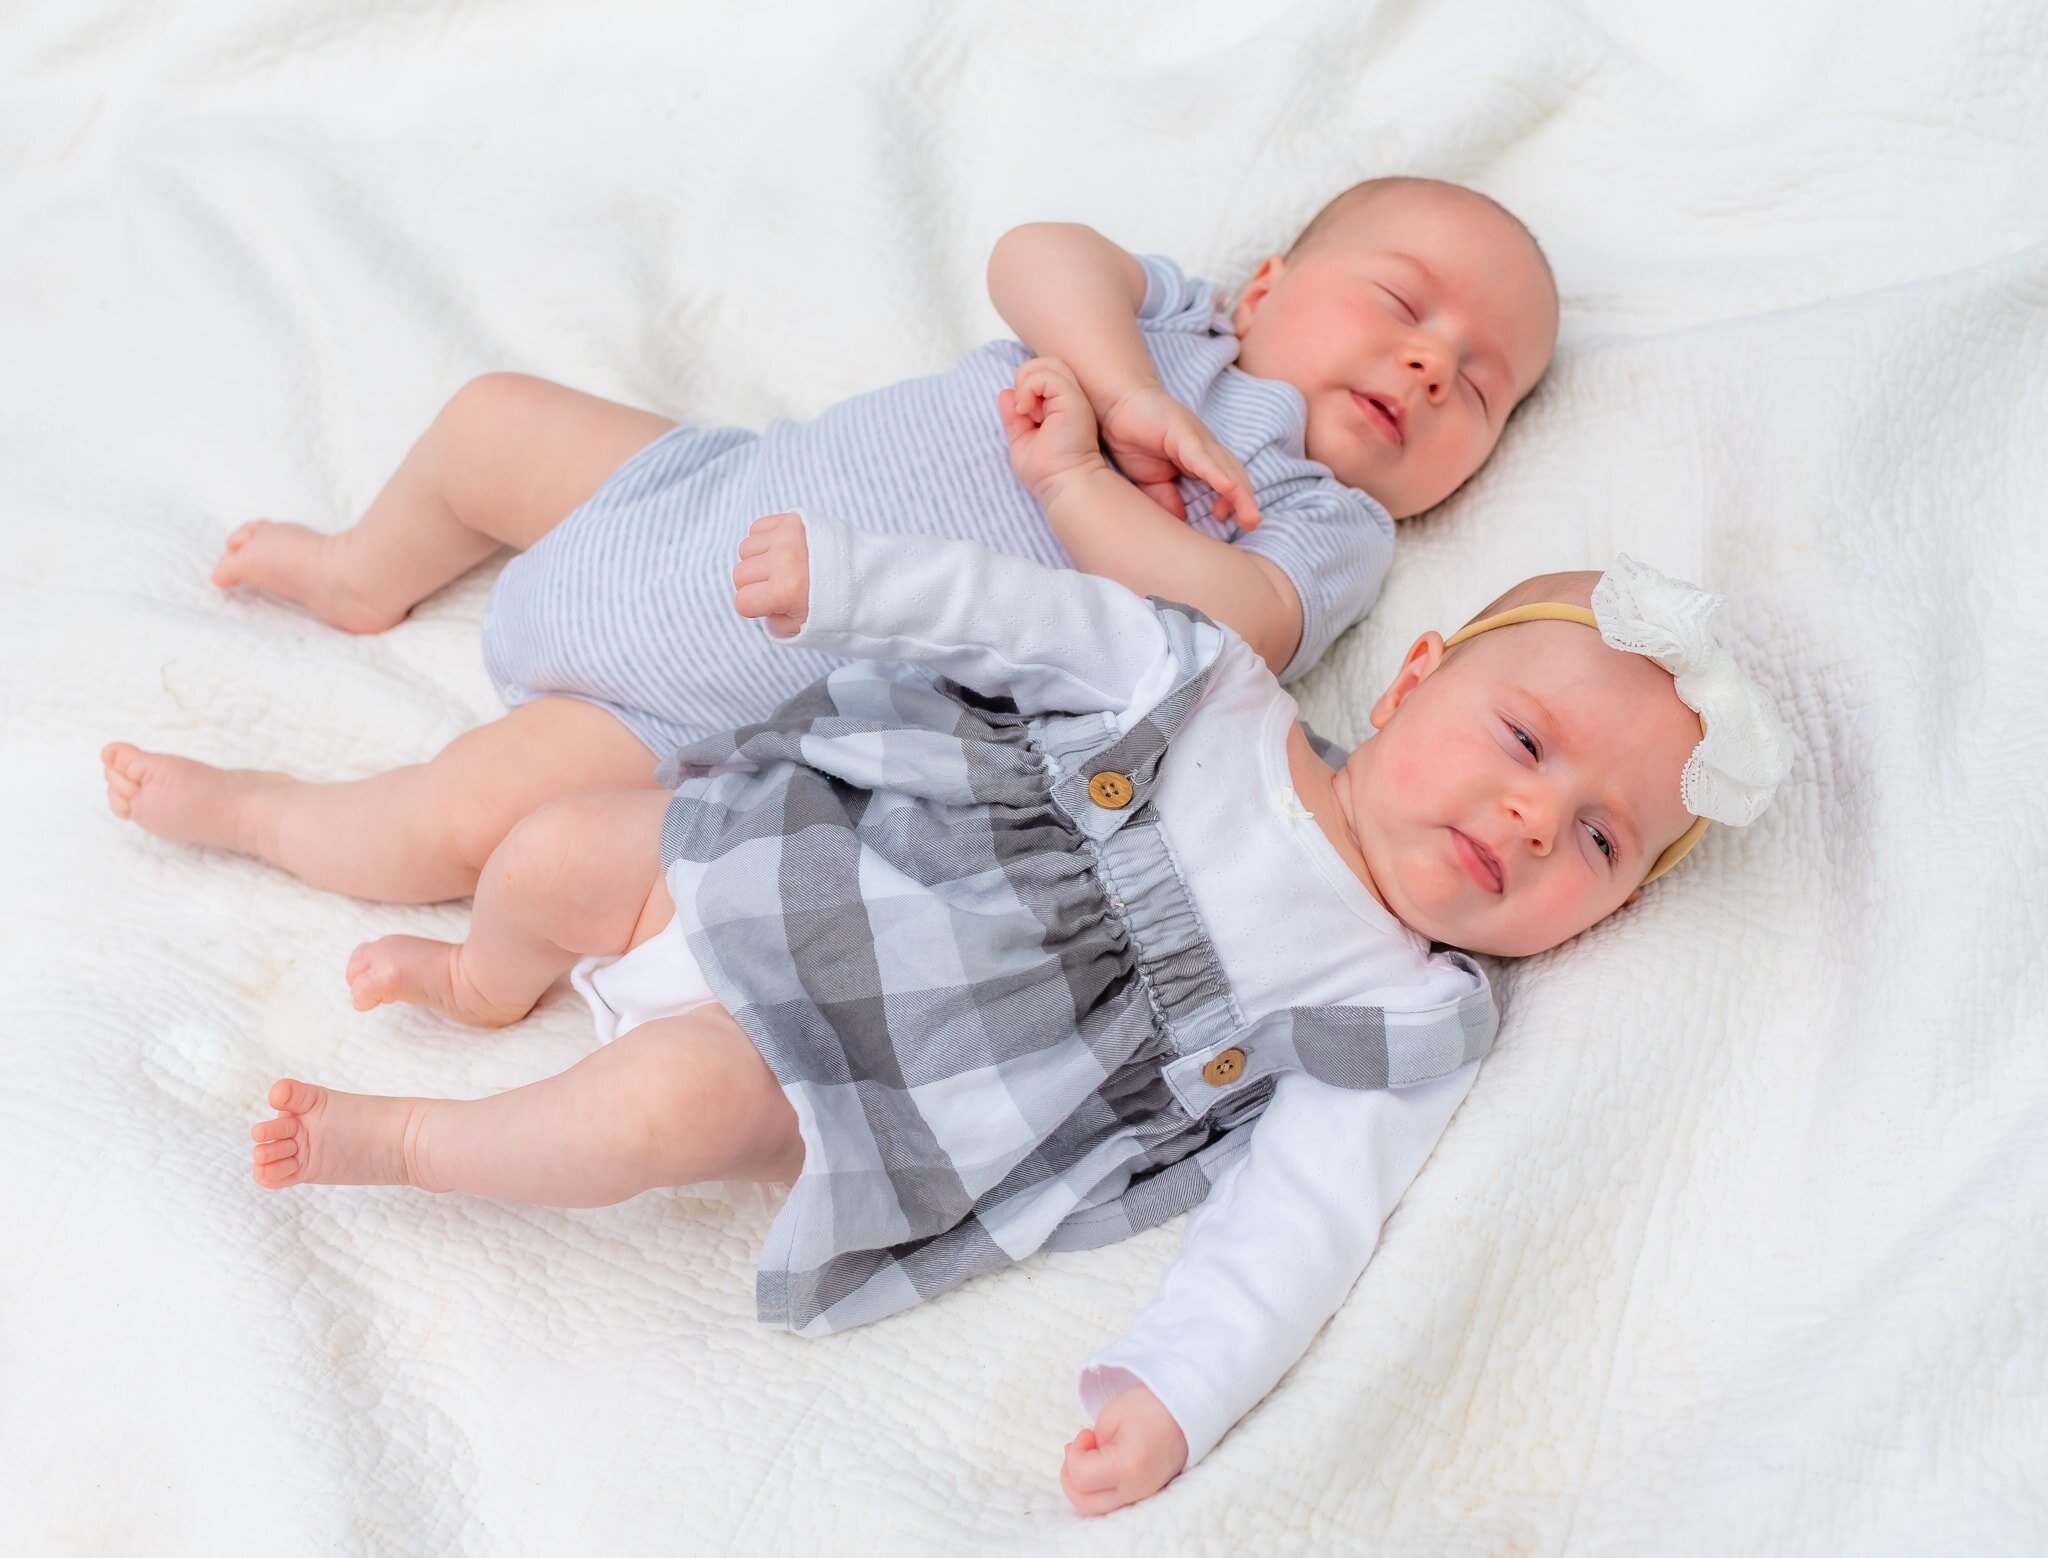 Bethesda Maryland Newborn Photoshoot - twin babies on a blanket